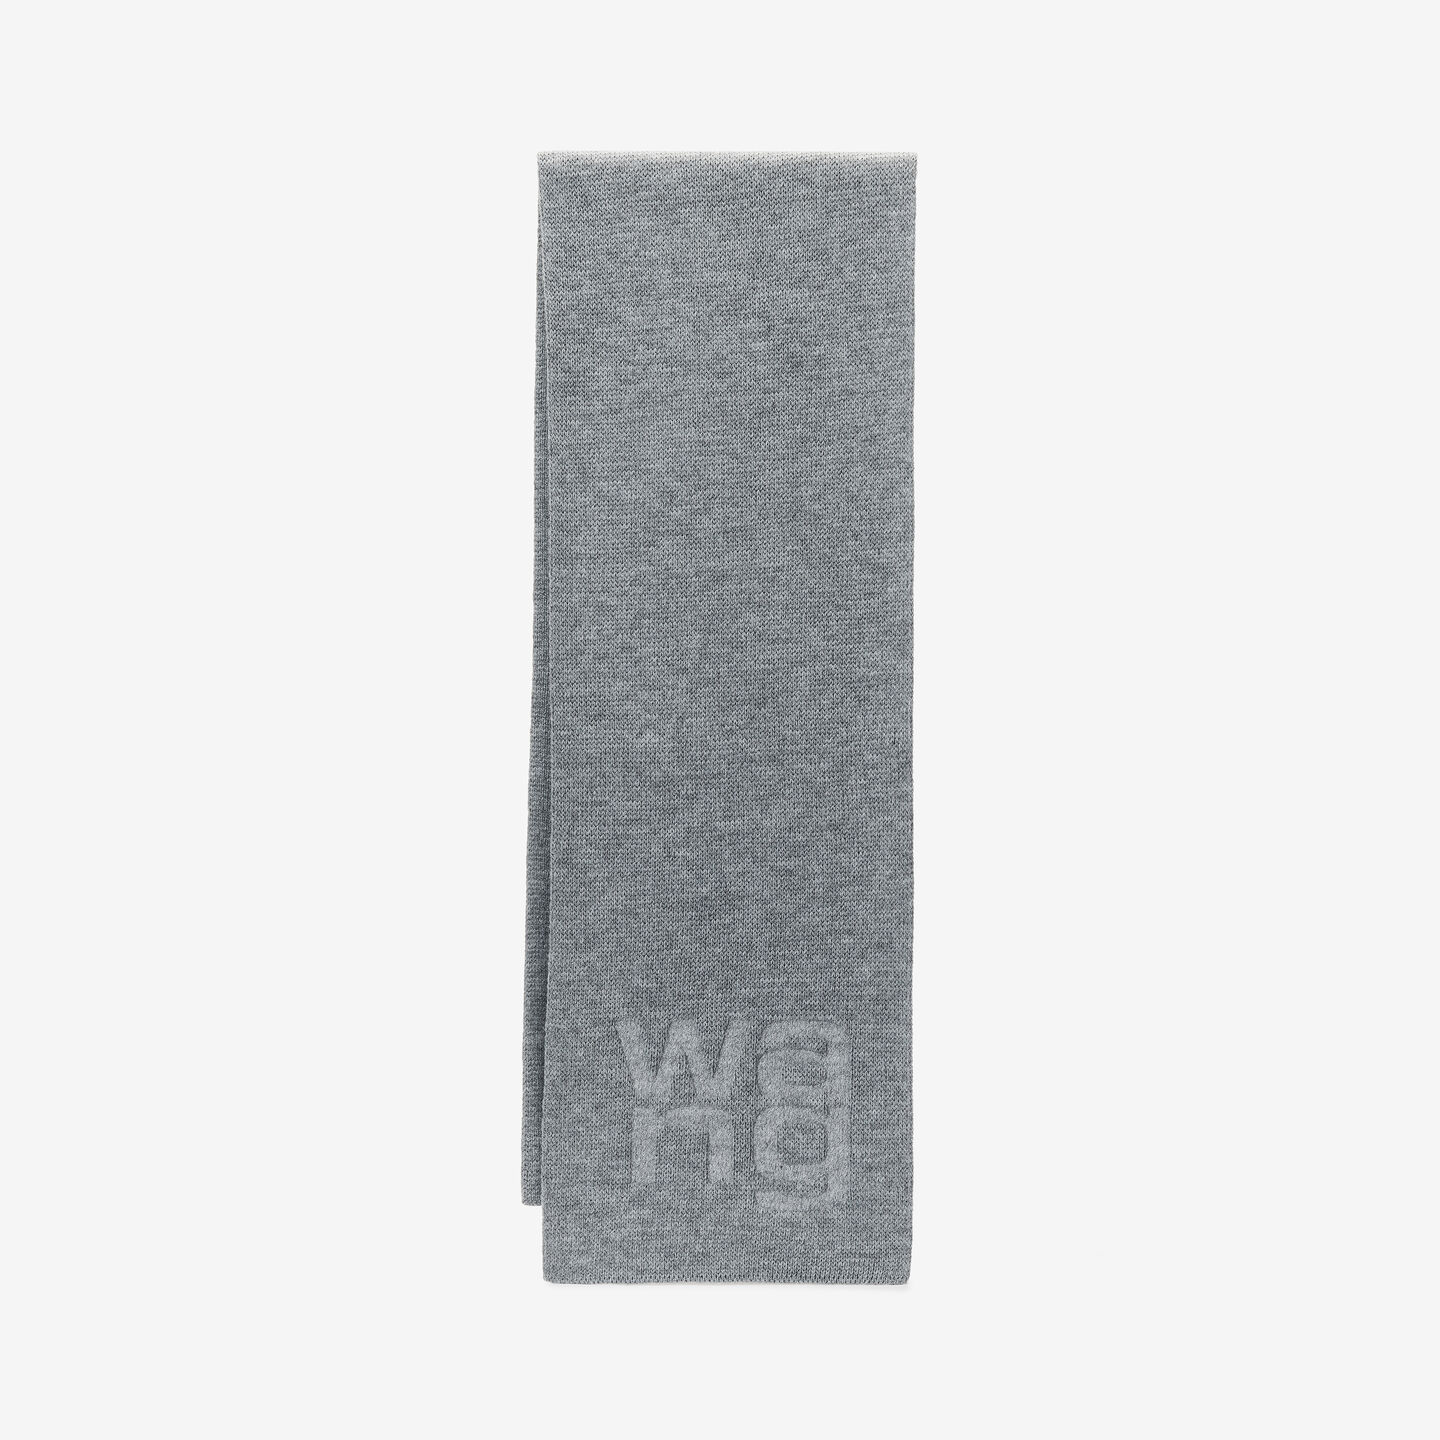 Alexander Wang Logo Scarf In Compact Deboss In Medium Grey Melange